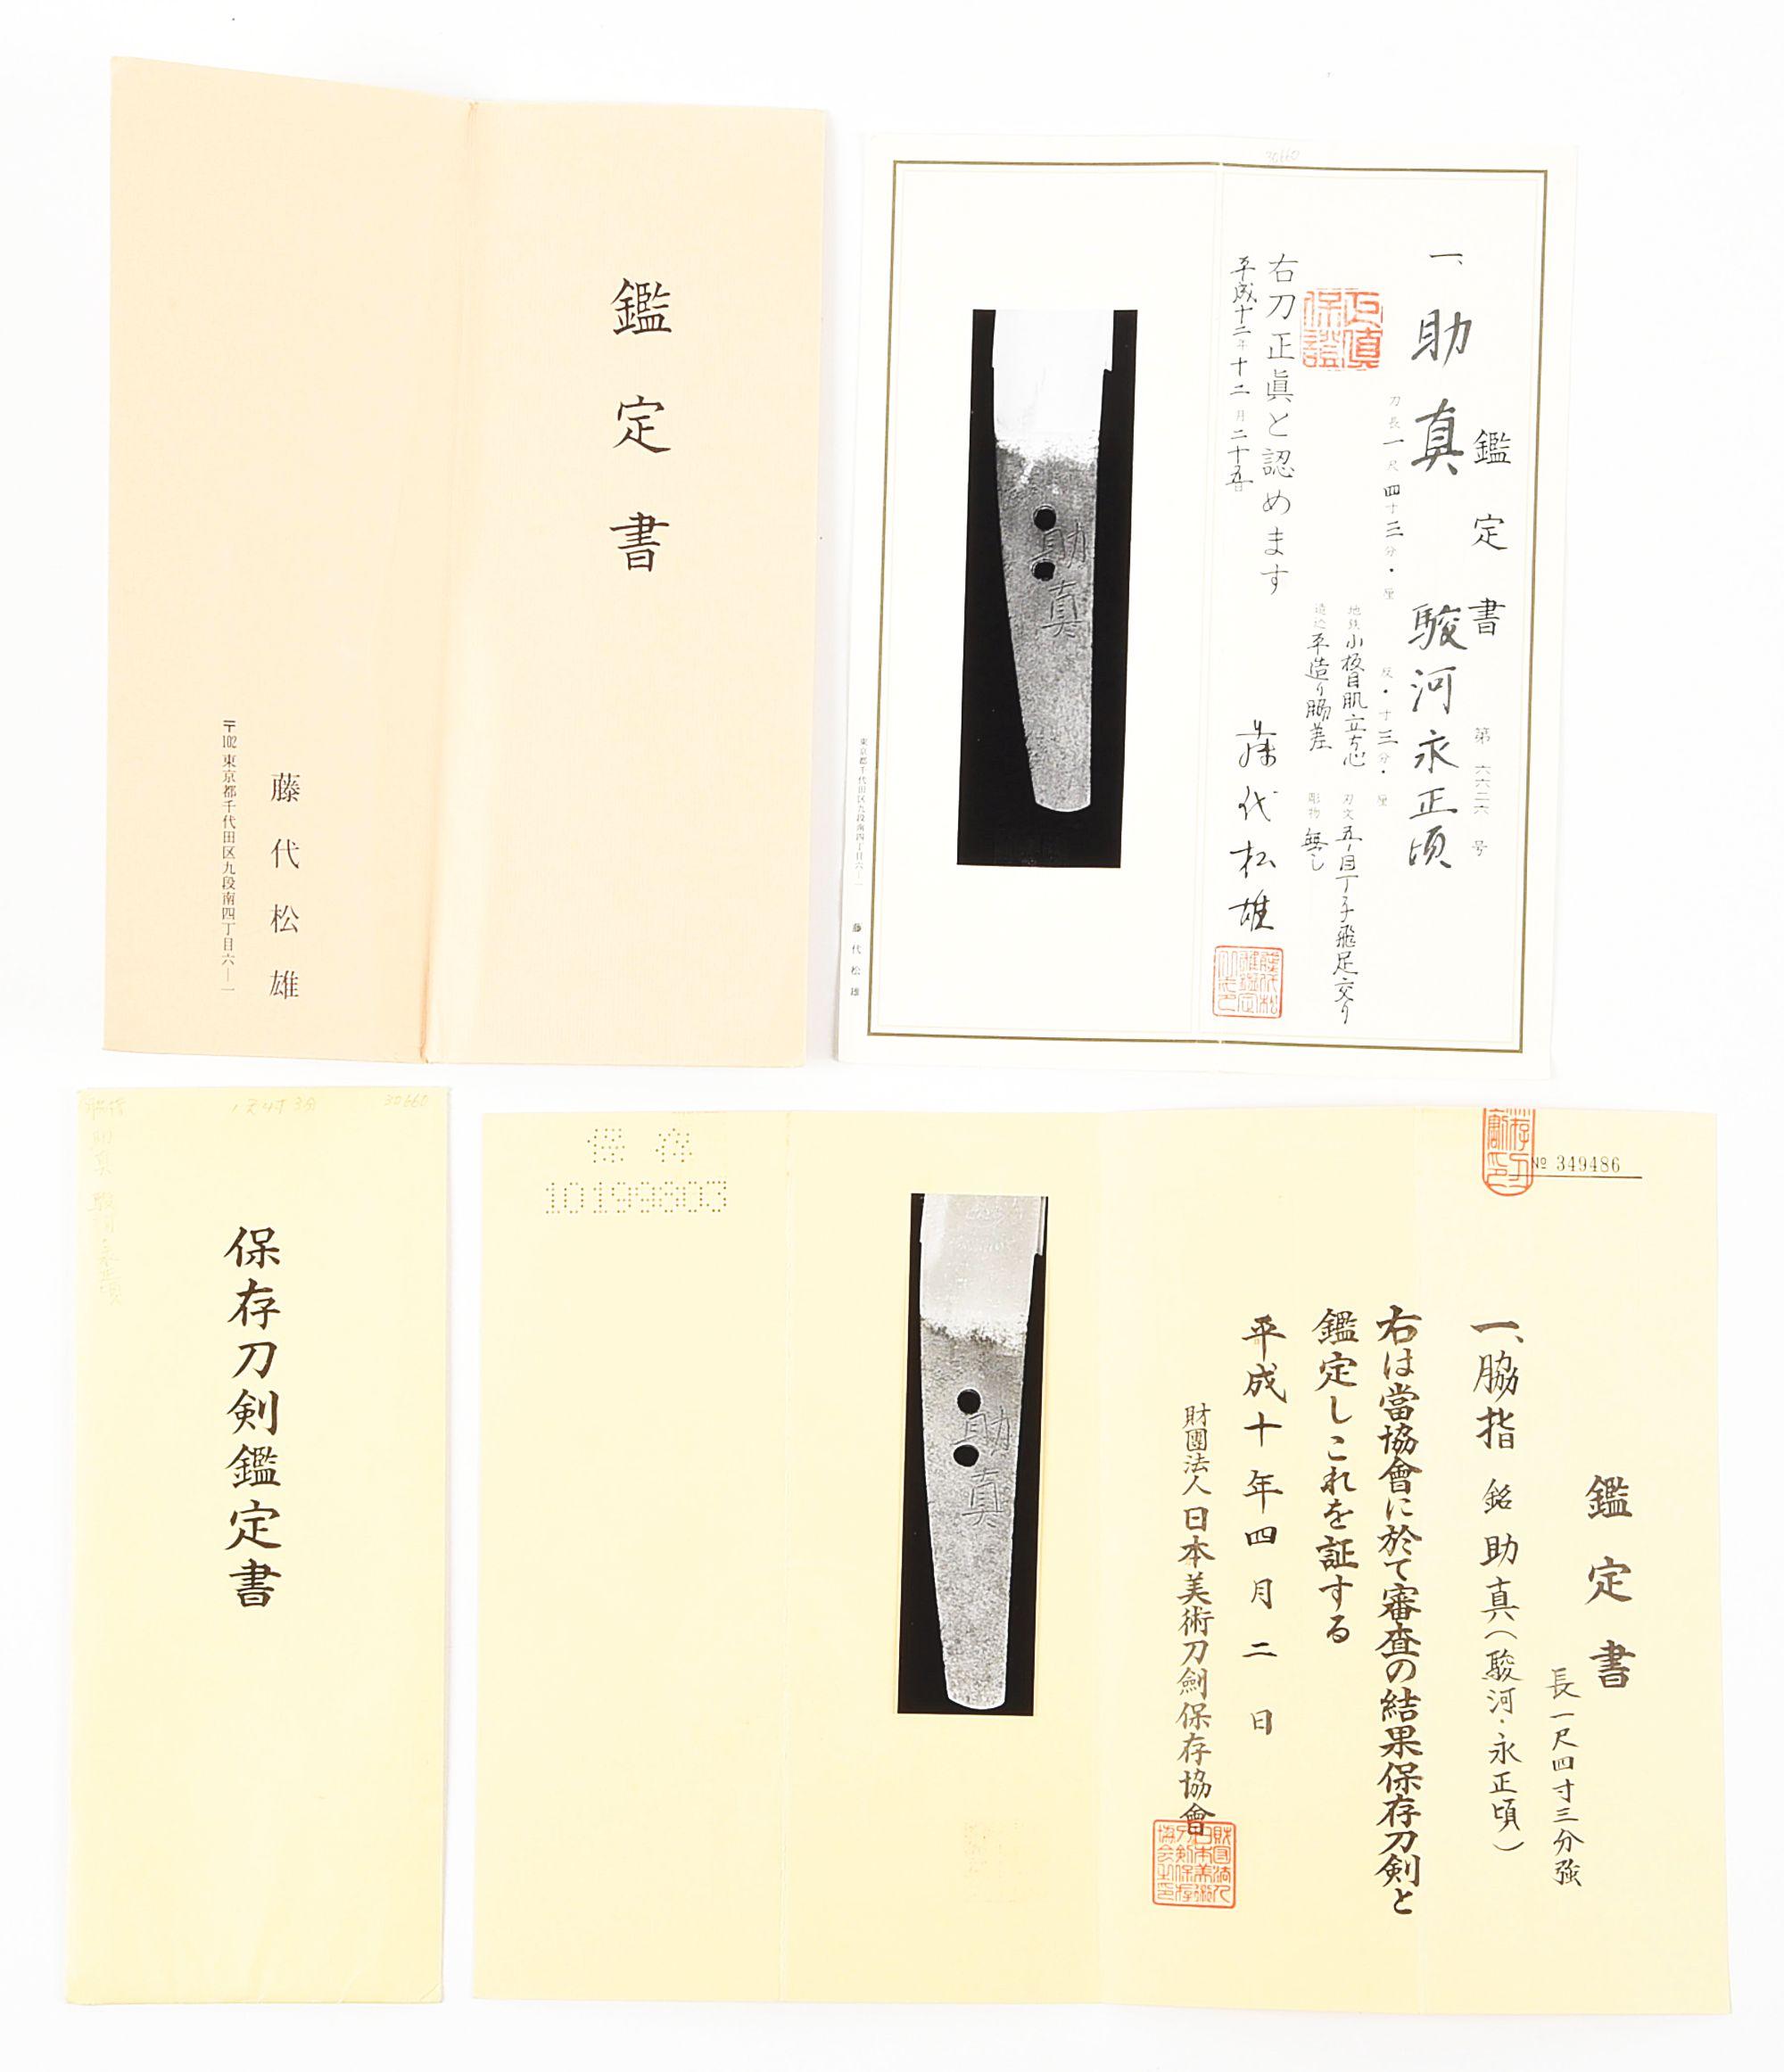 KOTO WAKIZASHI WITH SCARCE HIRA-ZUKURI FORM SIGNED SUKESADA, WITH NBTHK HOZON PAPERS AND MATSUO FUJI